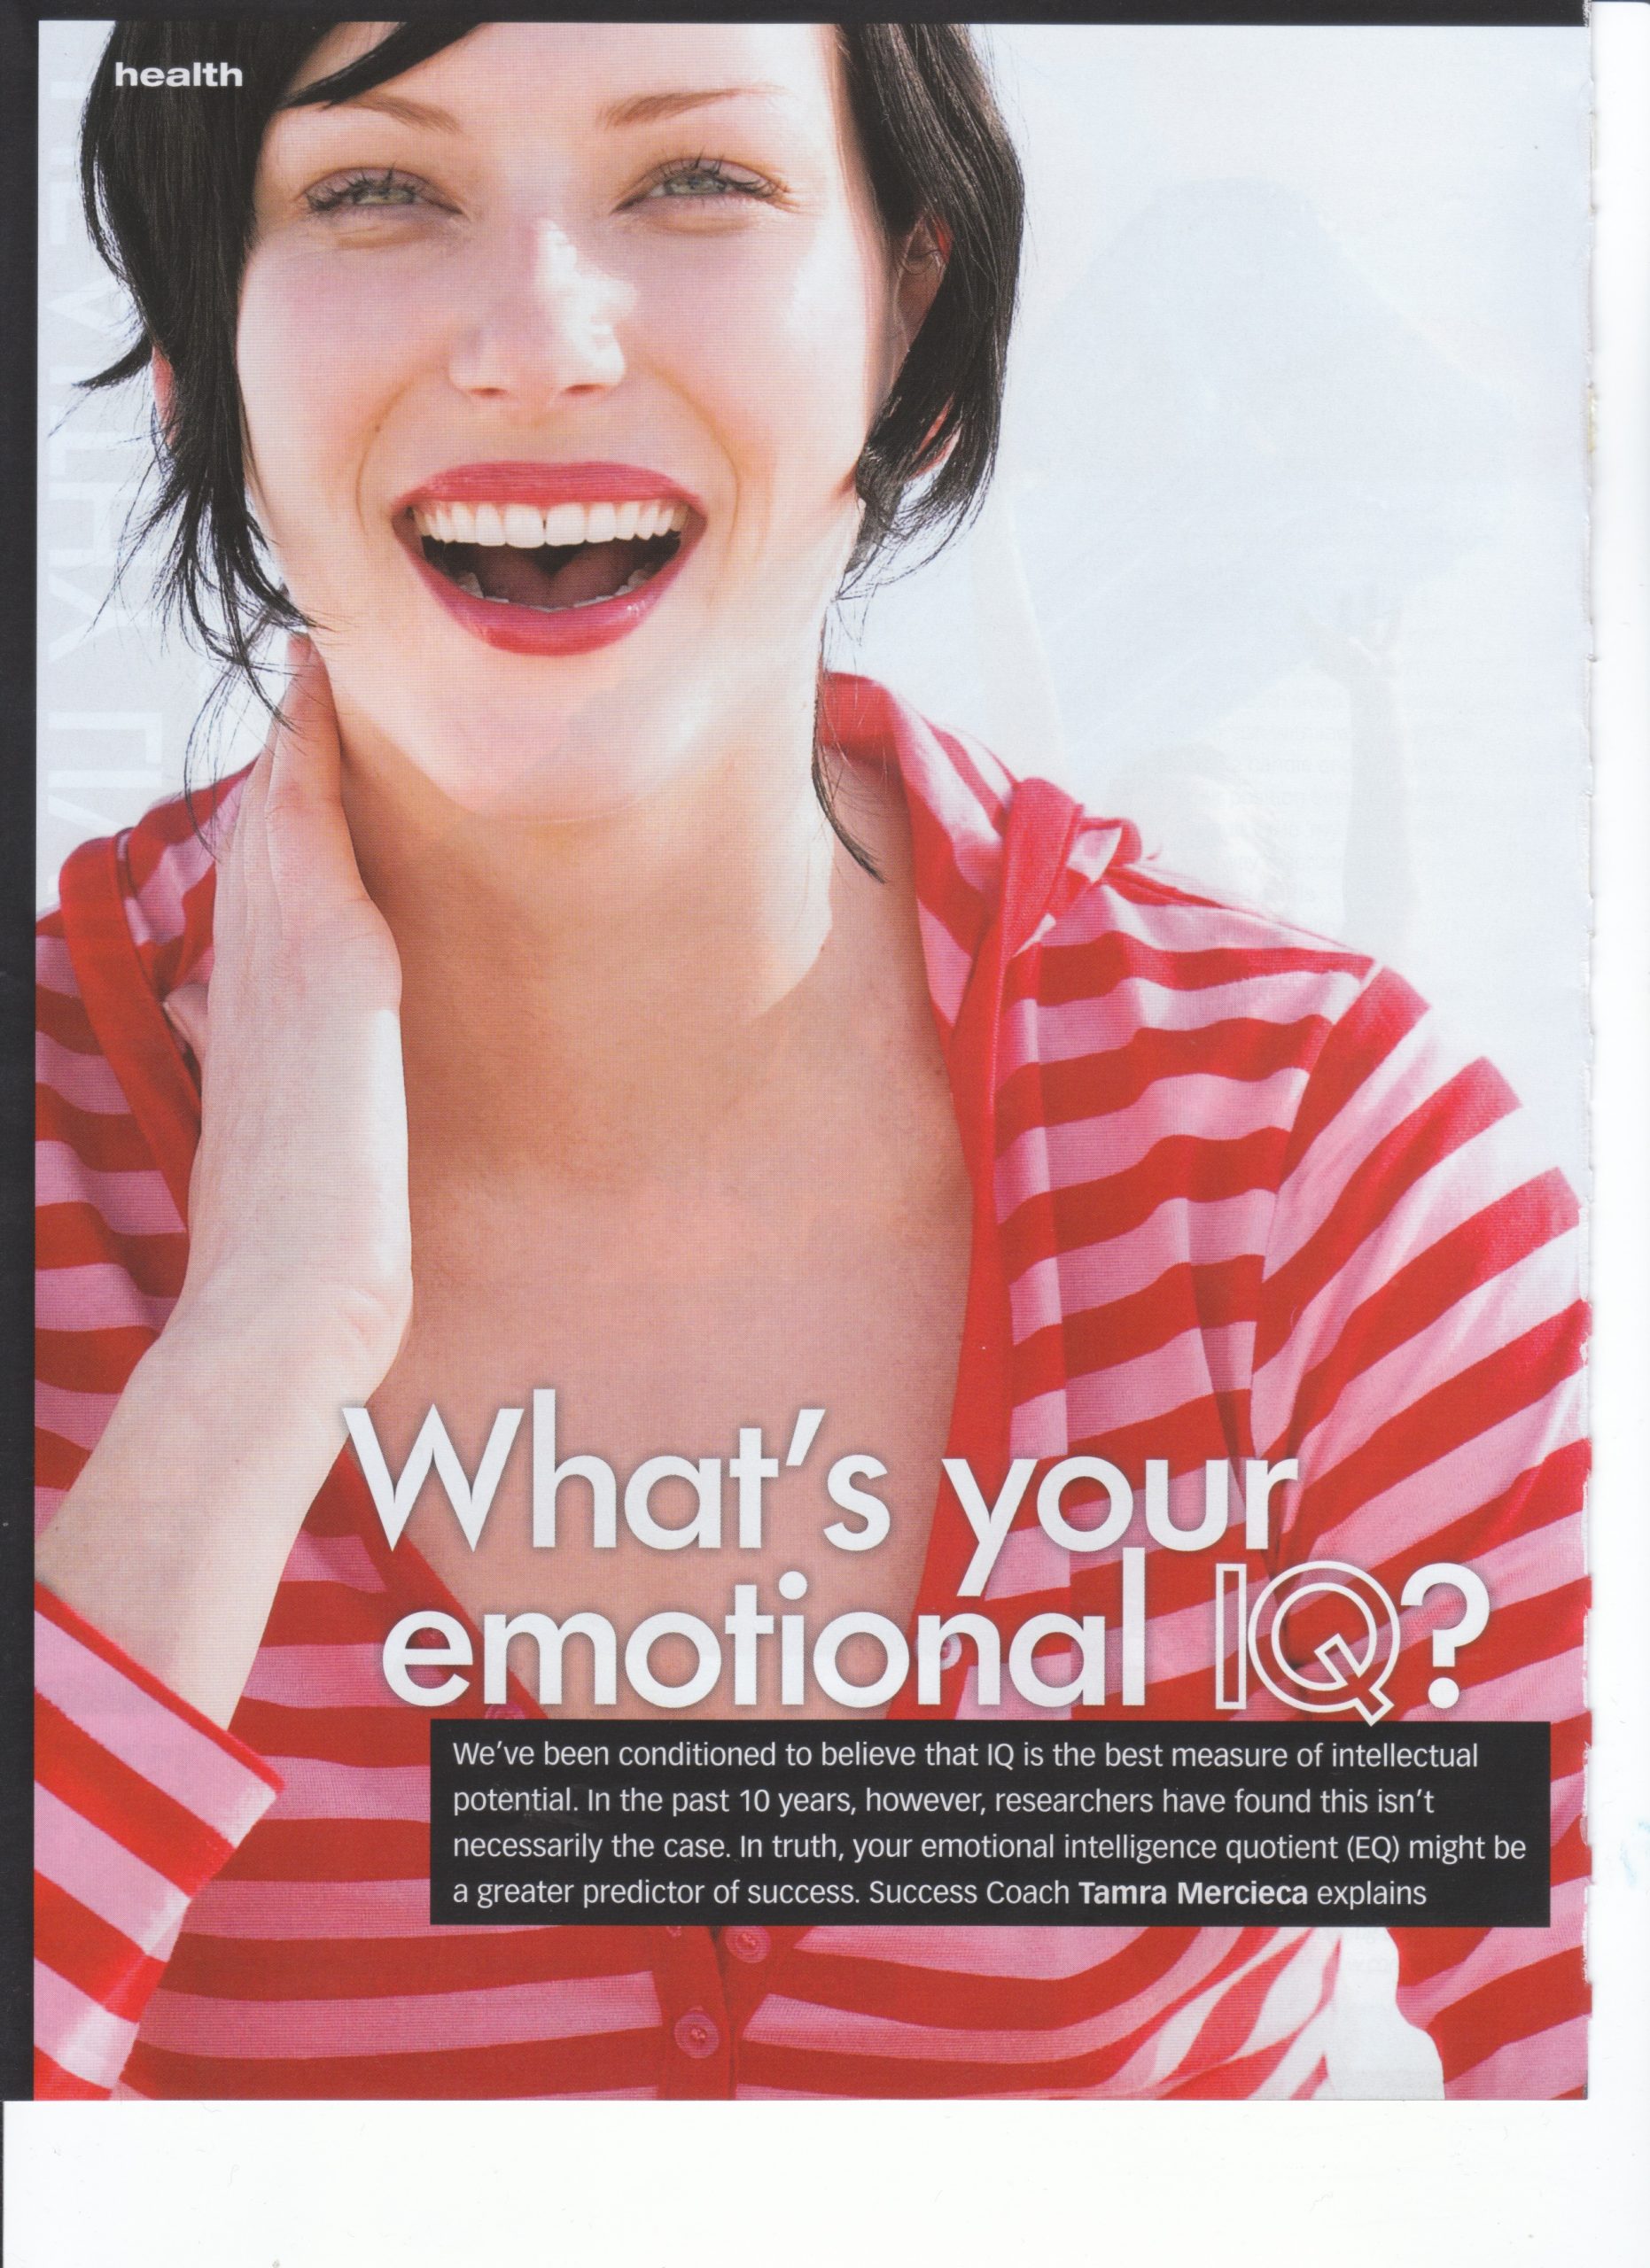 Emotional IQ (EQ), Womens Health and Fitness, 2008 